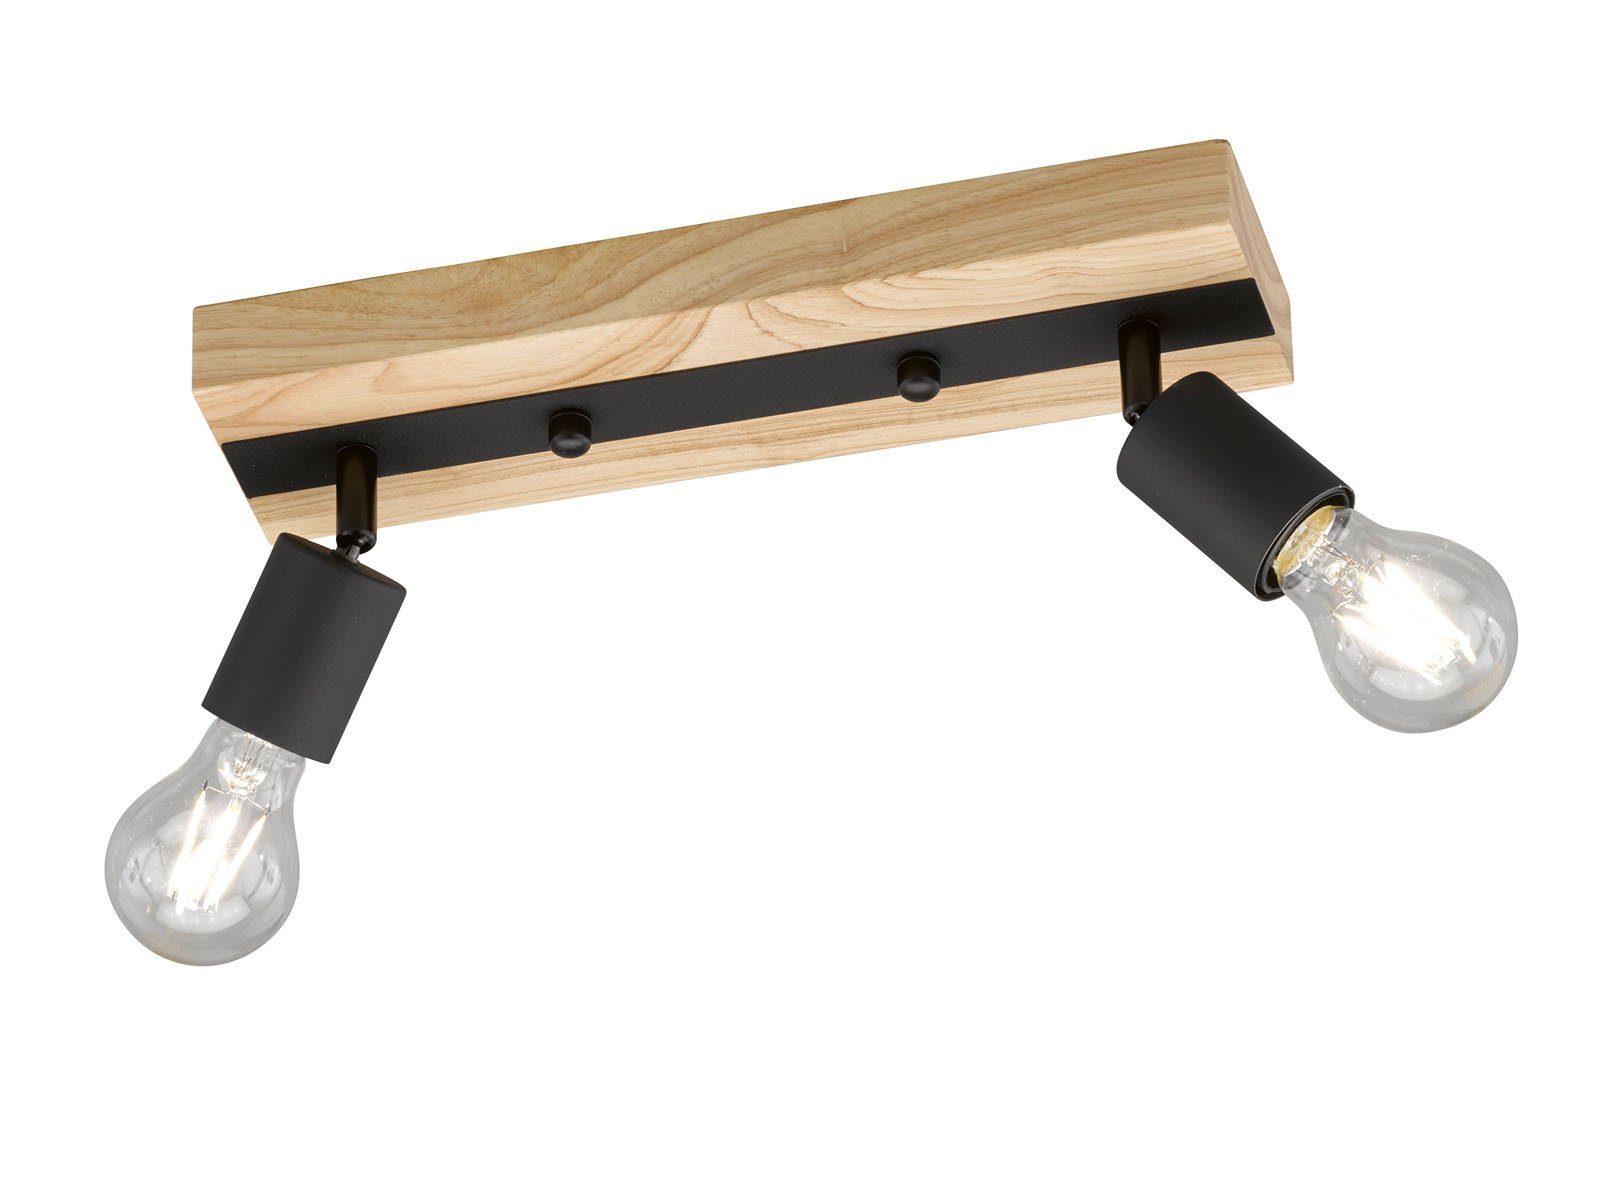 wechselbar, innen Deckenlampe Holz-lampe Deckenstrahler, 33cm Dimmfunktion, LED Holzbalken Strahler 2-flammig LED FHL easy! Warmweiß, mit B: